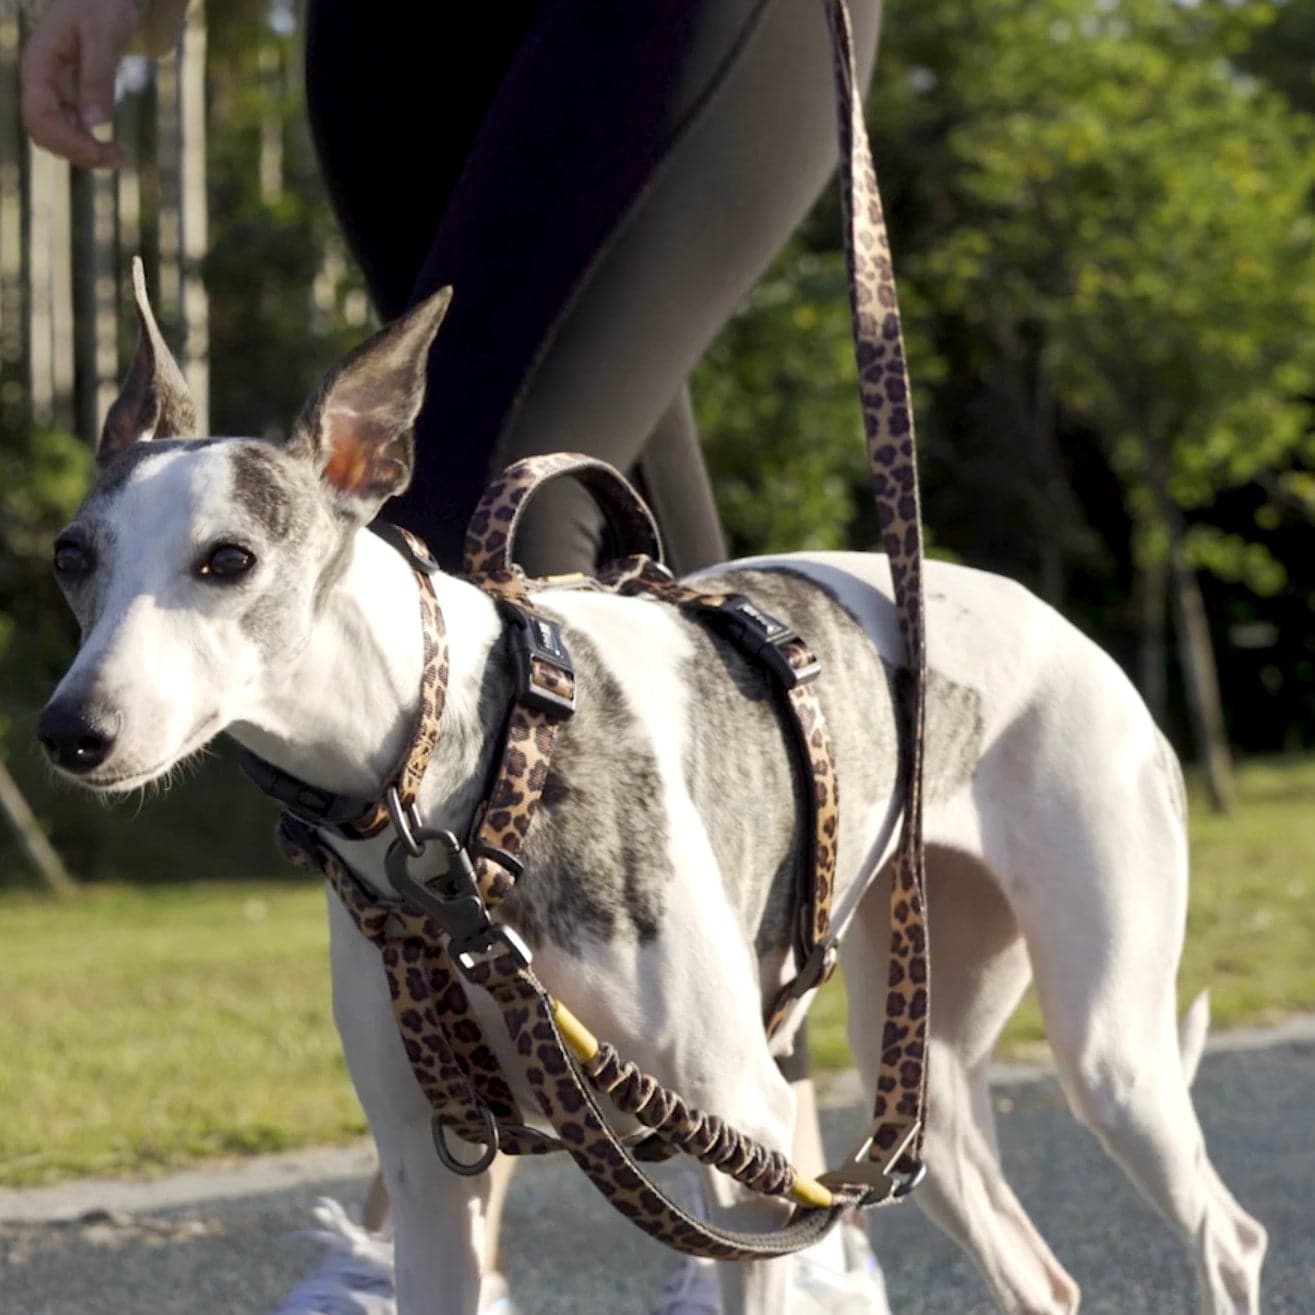 Speedy Dogs Fabric Dog Walking Bag whippet Greyhound 